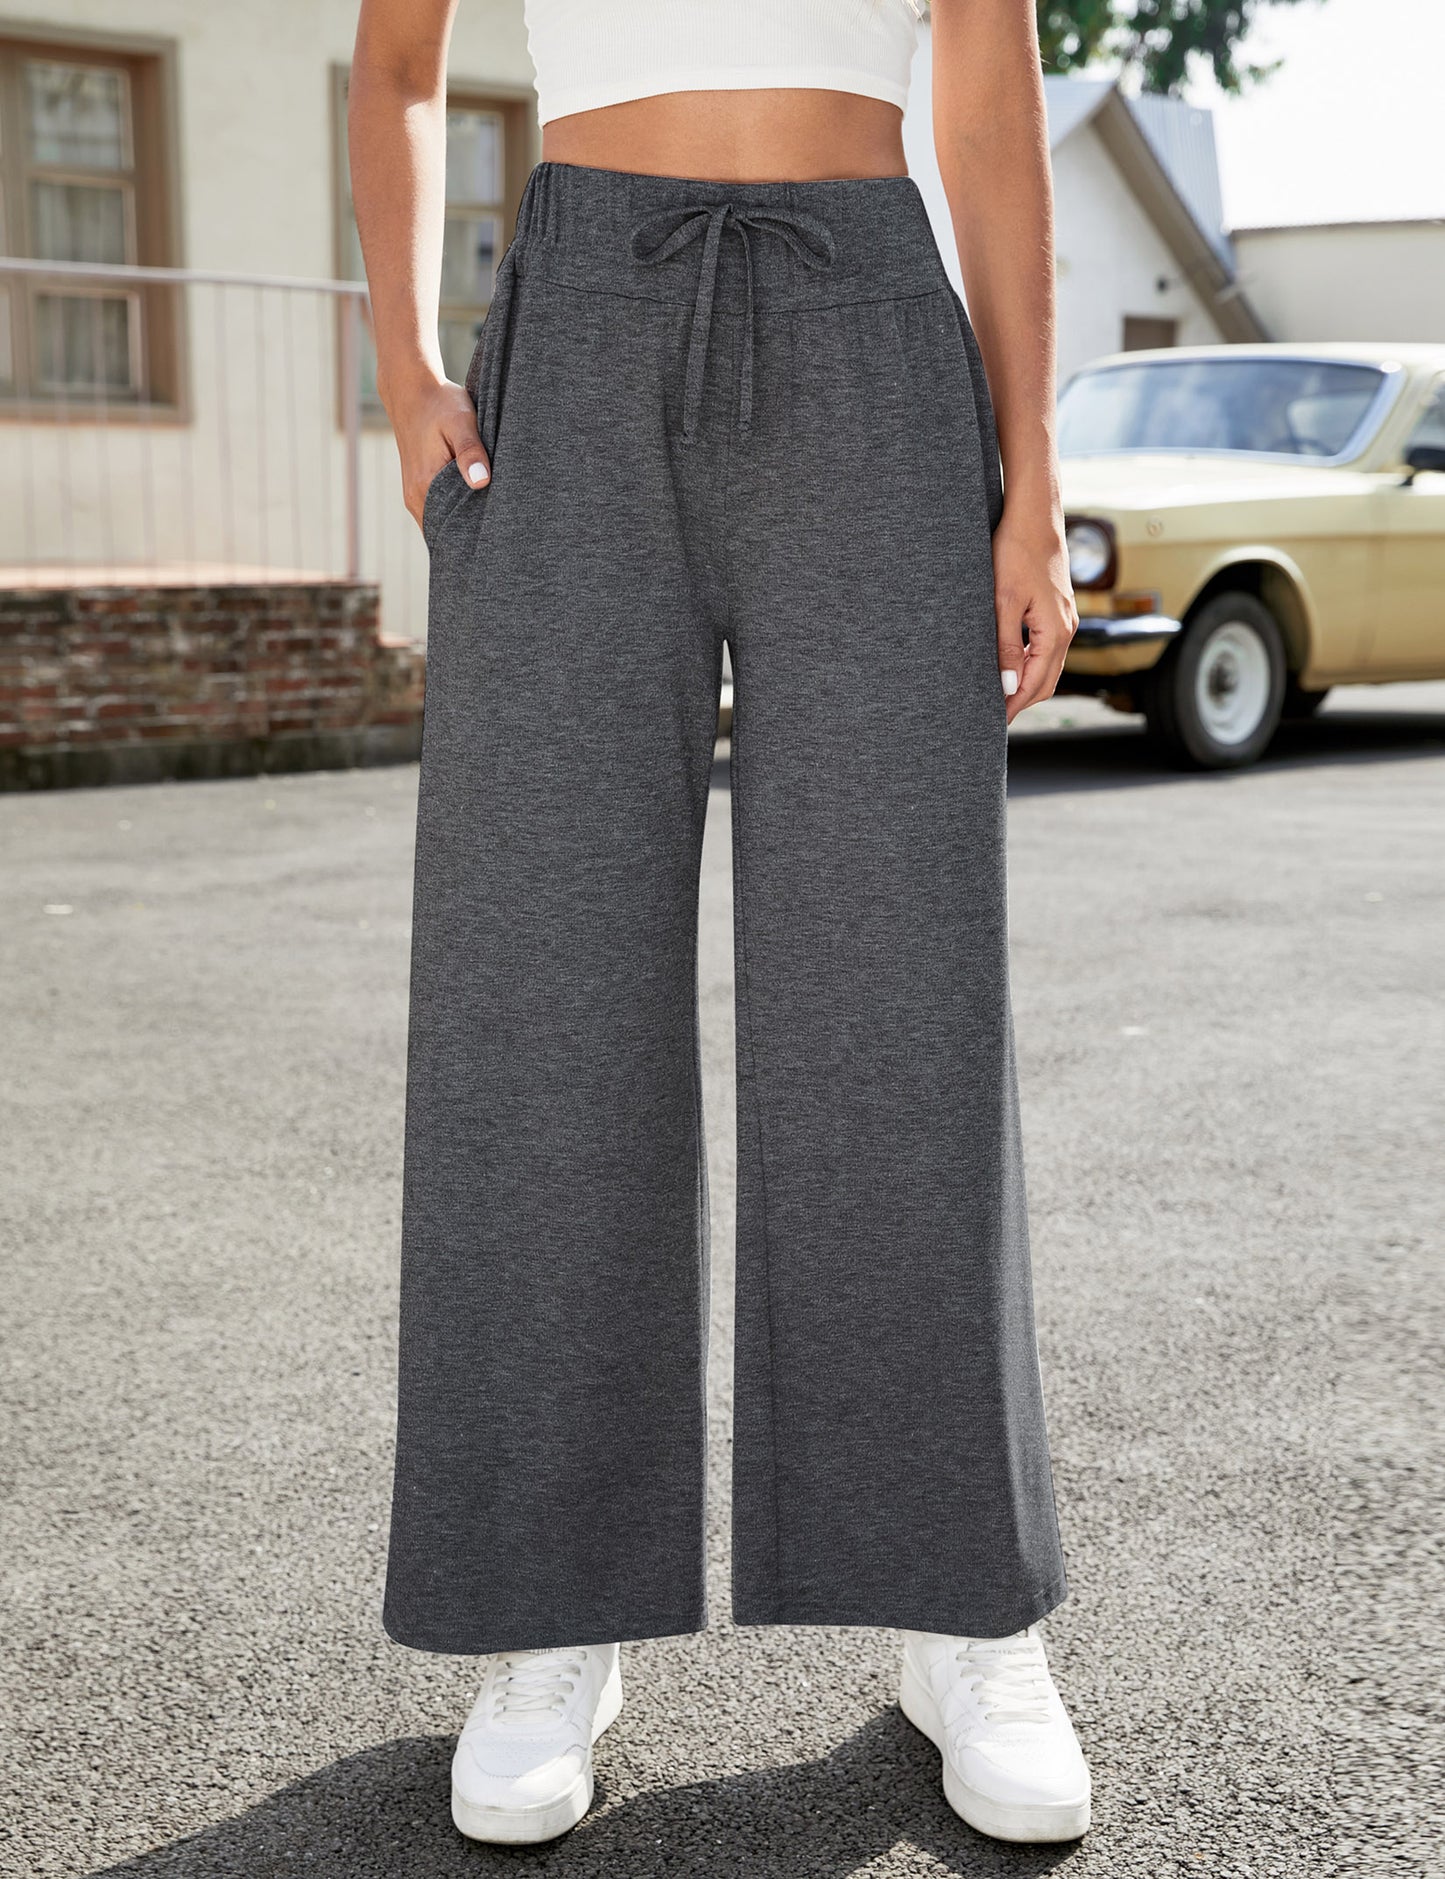 YESFASHION Women's Yoga Pants with Pockets Drawstring Pants Grey